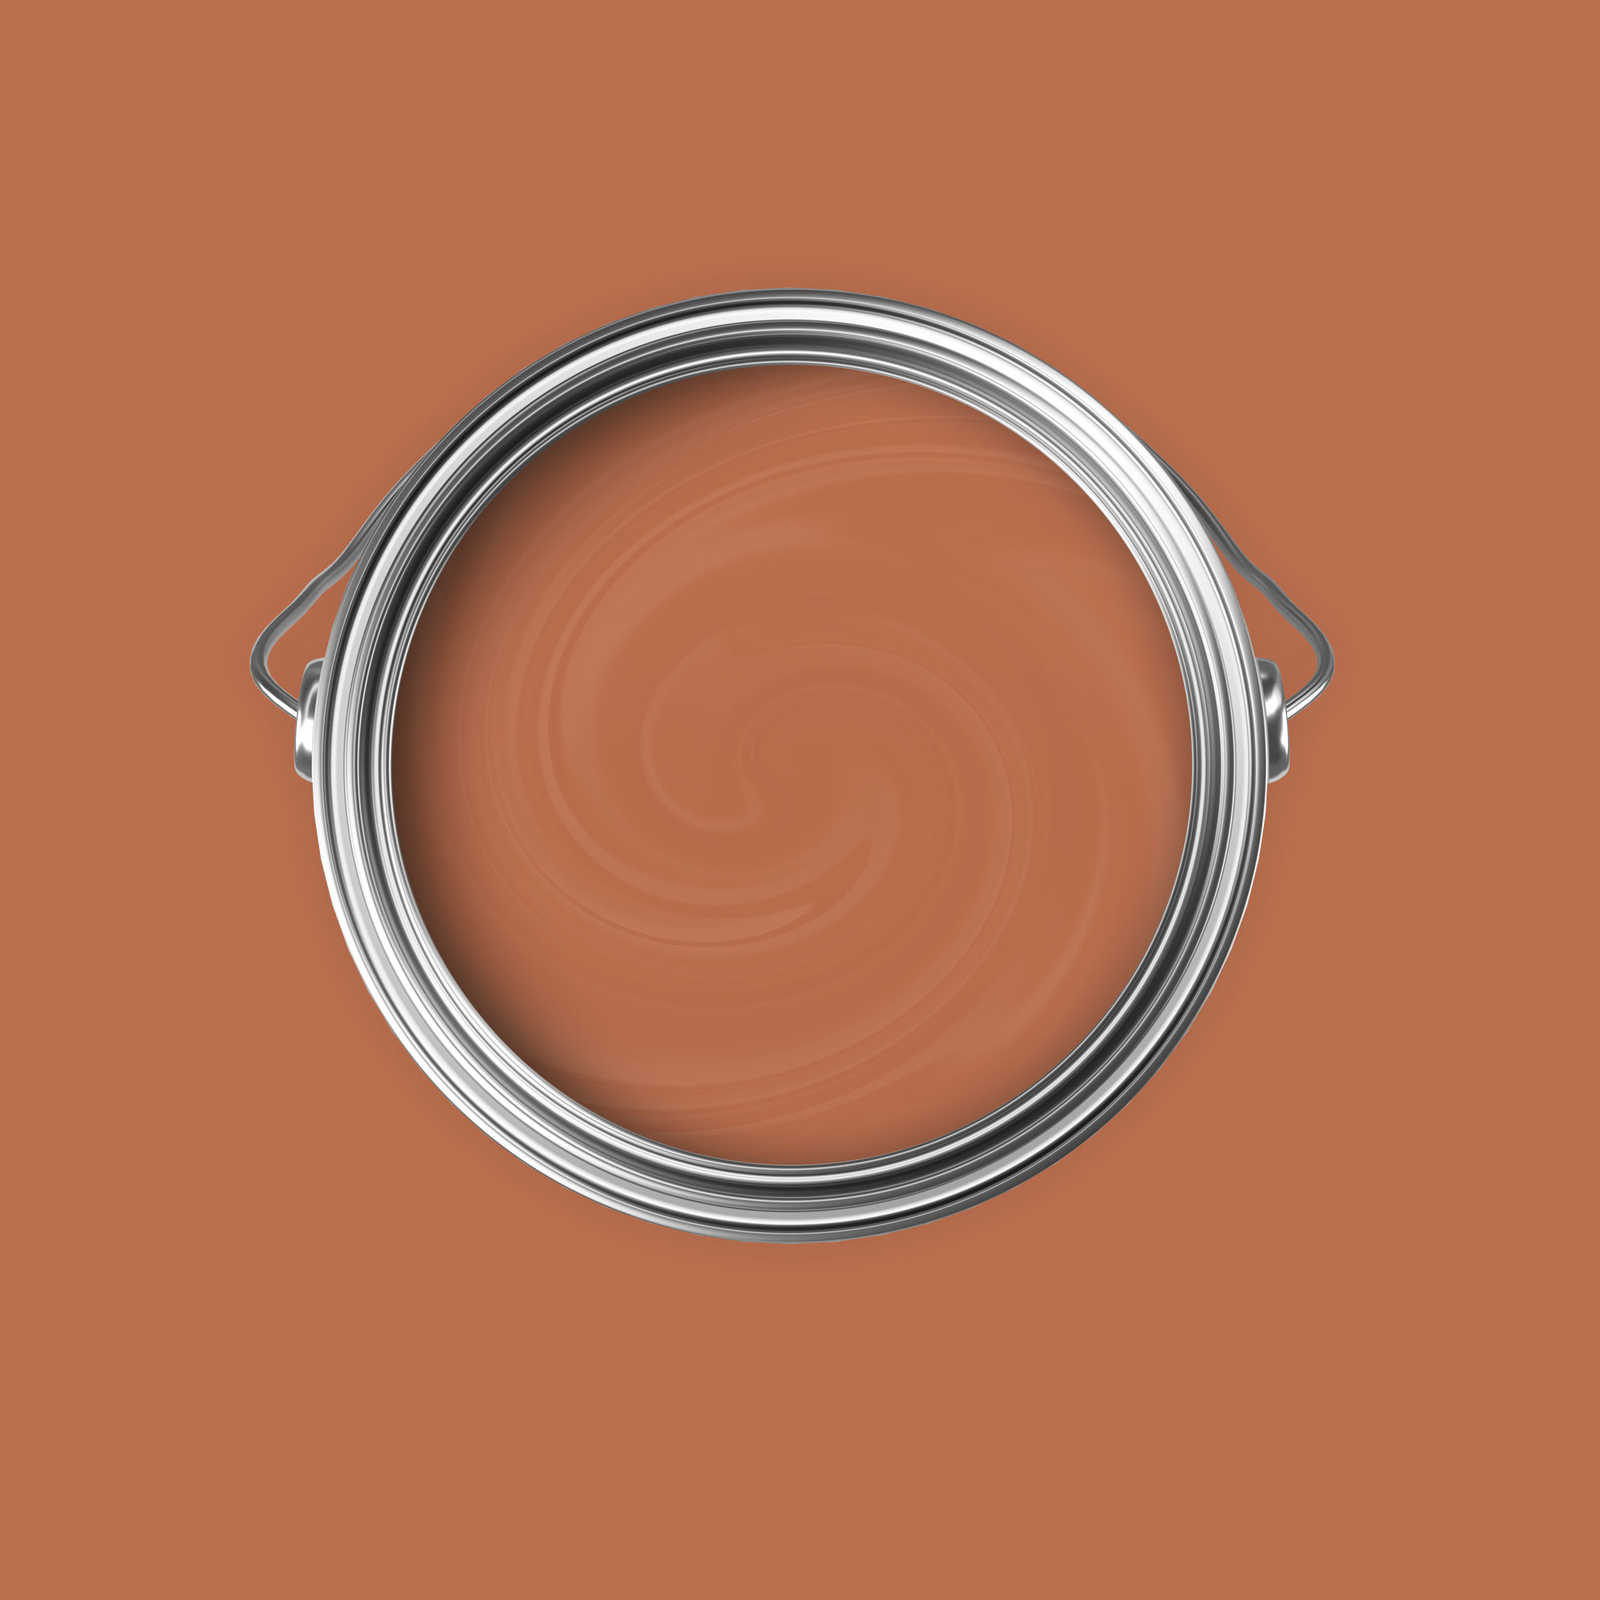             Premium Wall Paint stimulating copper »Pretty Peach« NW905 – 5 litre
        